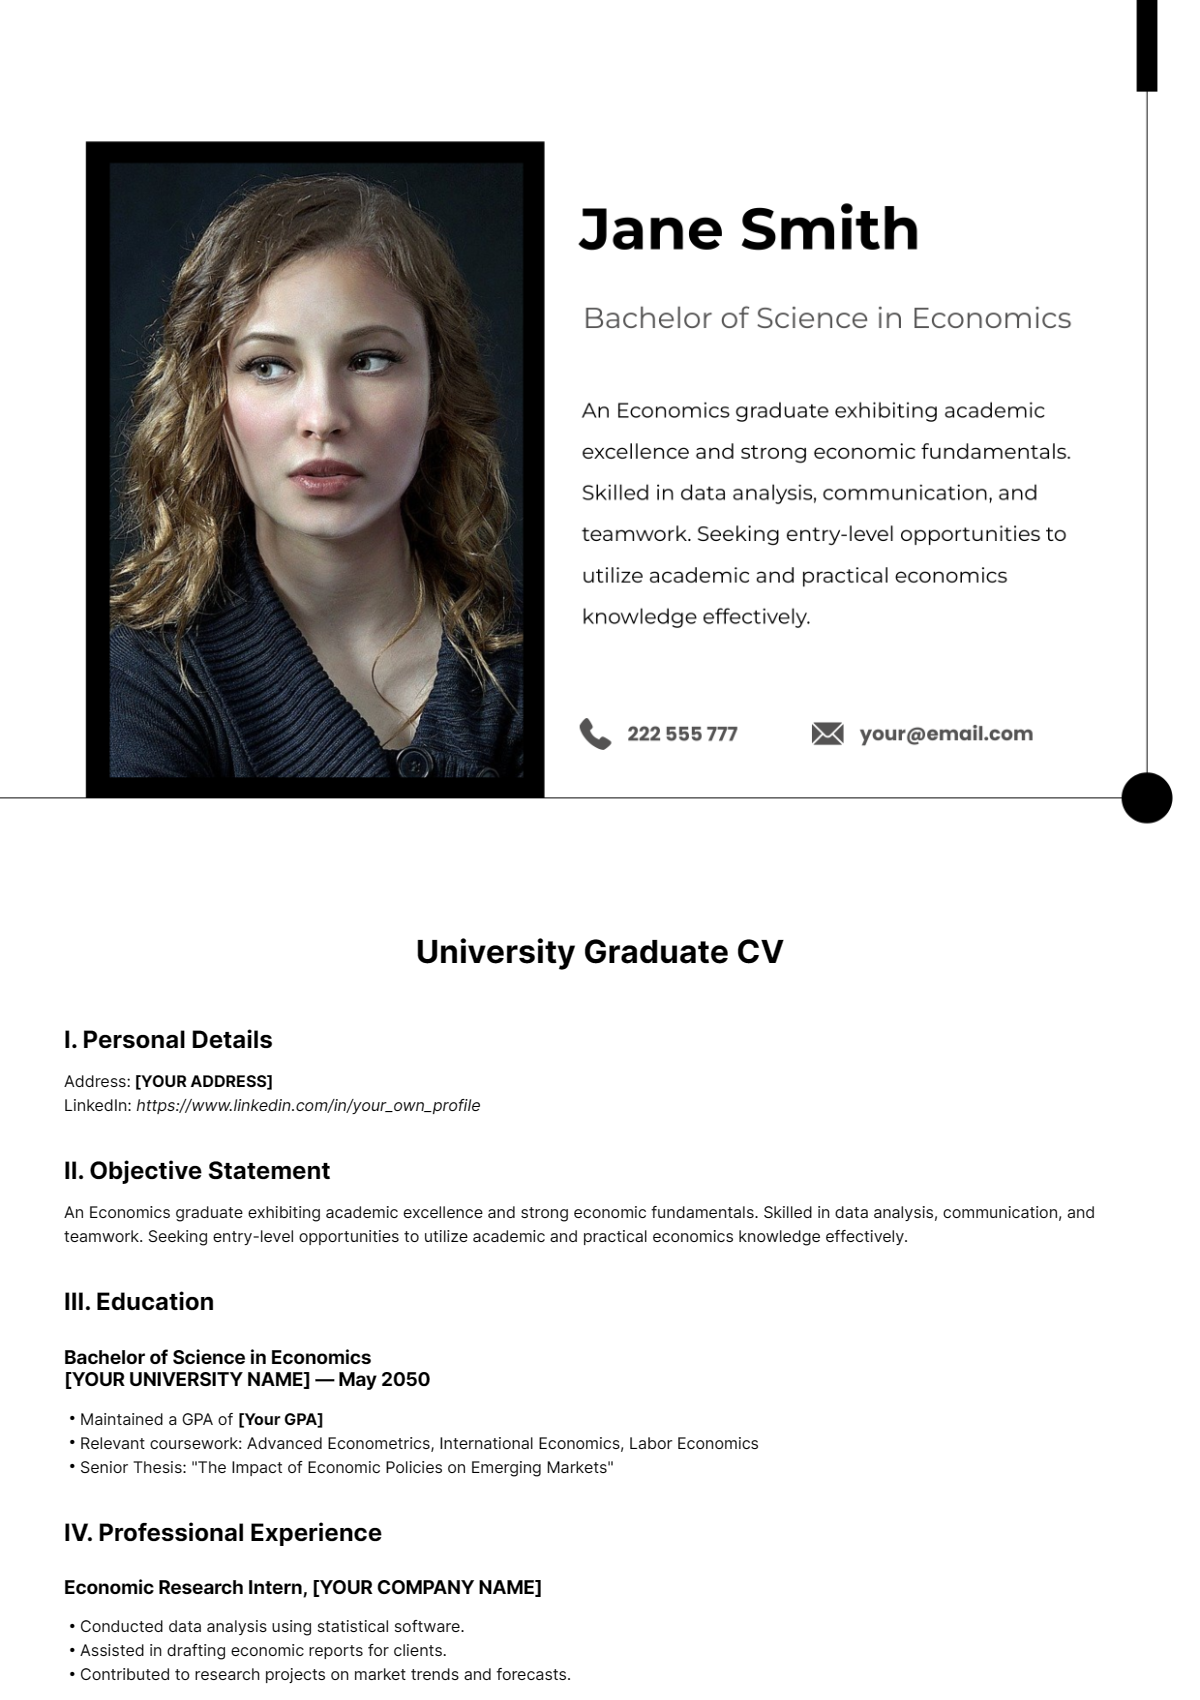 University Graduate CV Template